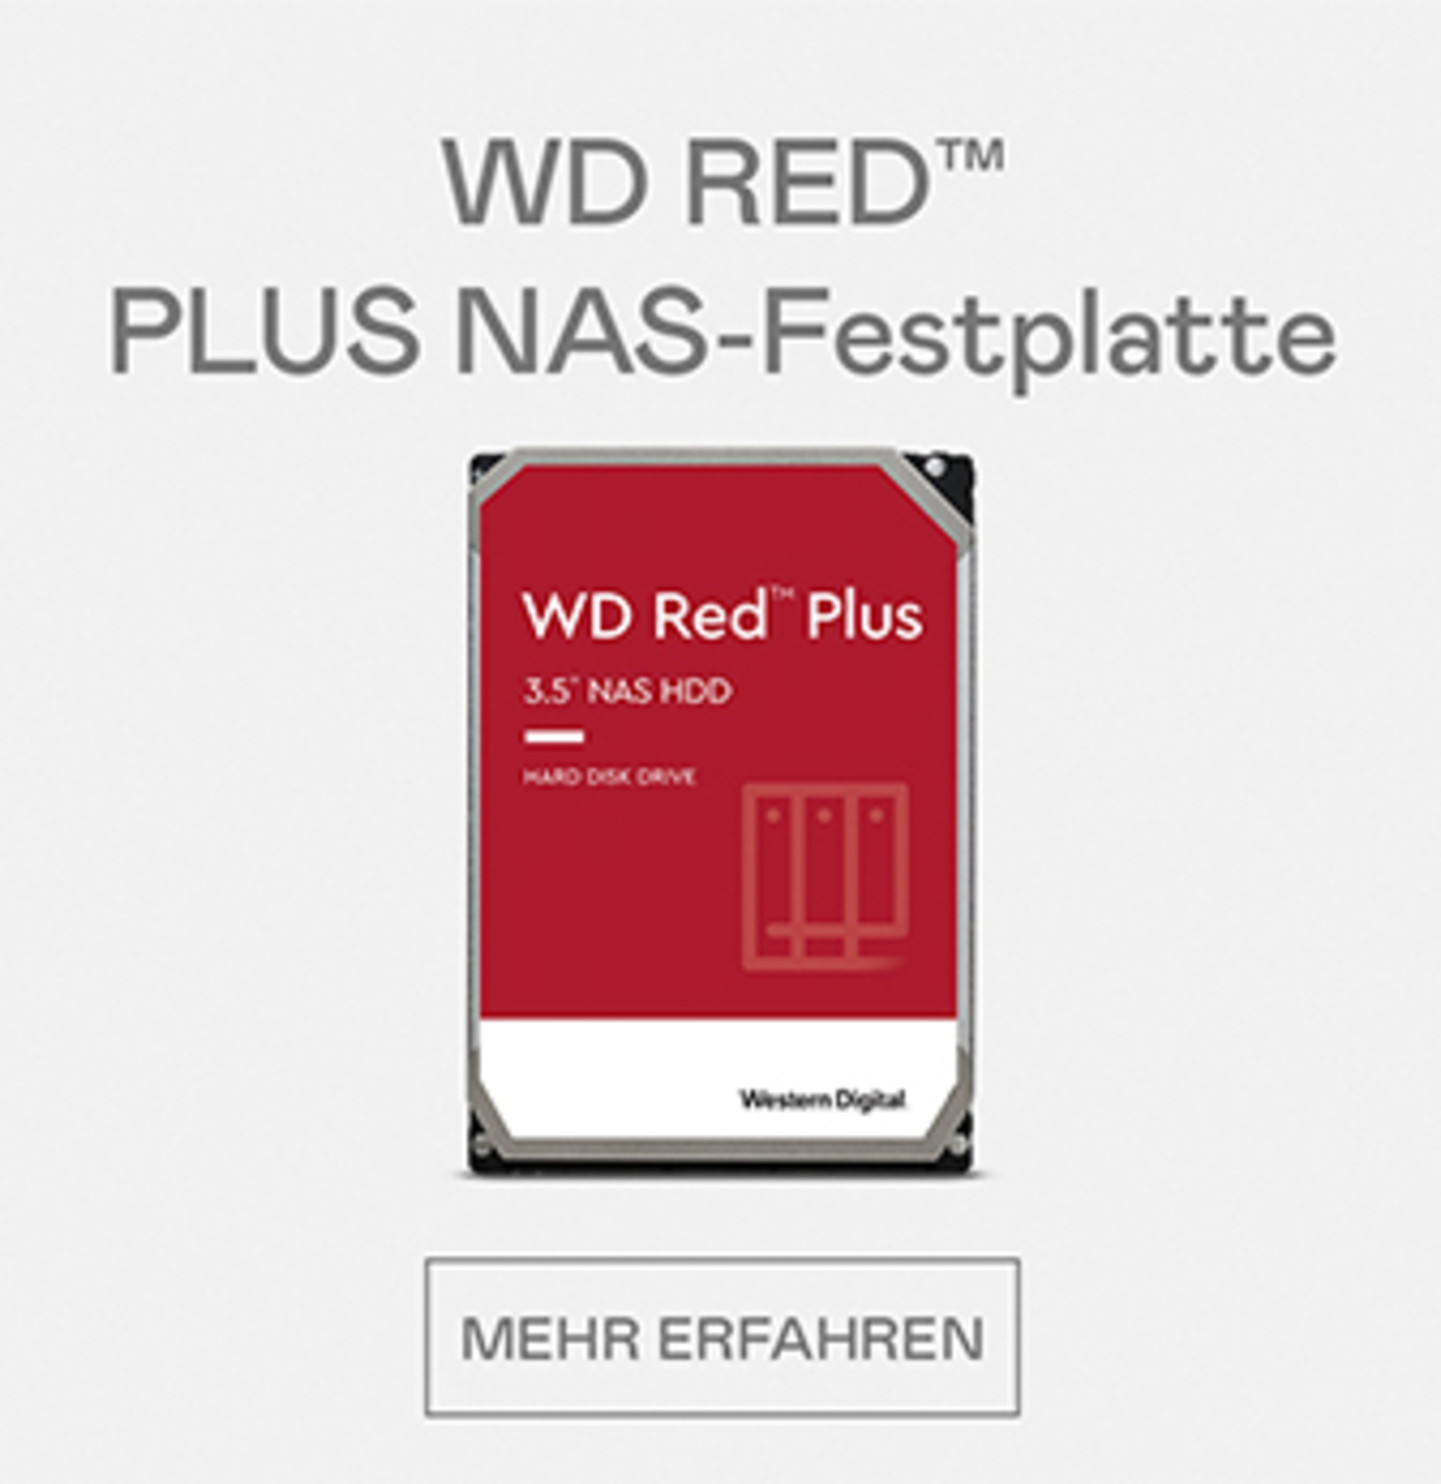 WD RED PLUS NAS-Festplatte